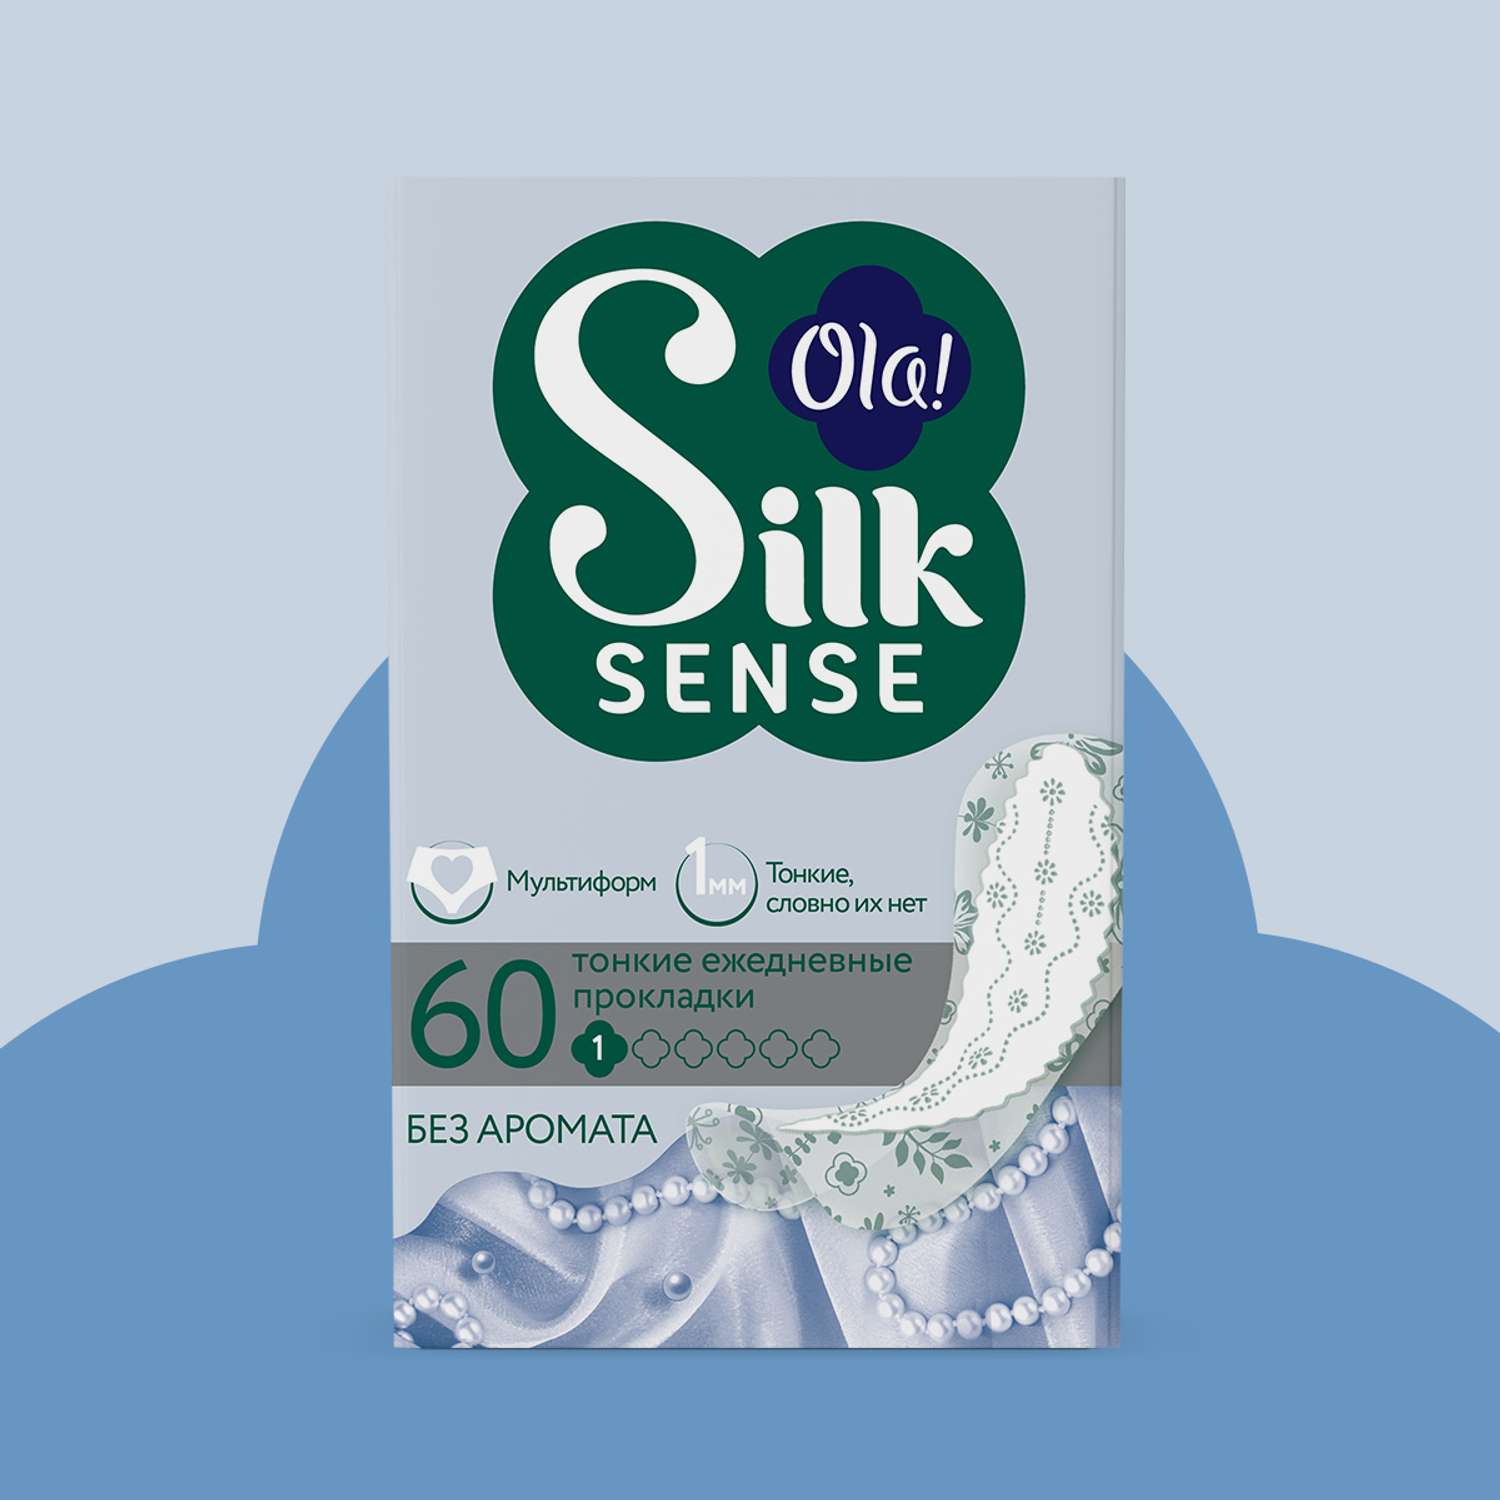 Ежедневные прокладки тонкие Ola! Silk Sense LIGHT стринг-мультиформ без аромата 60 шт - фото 1